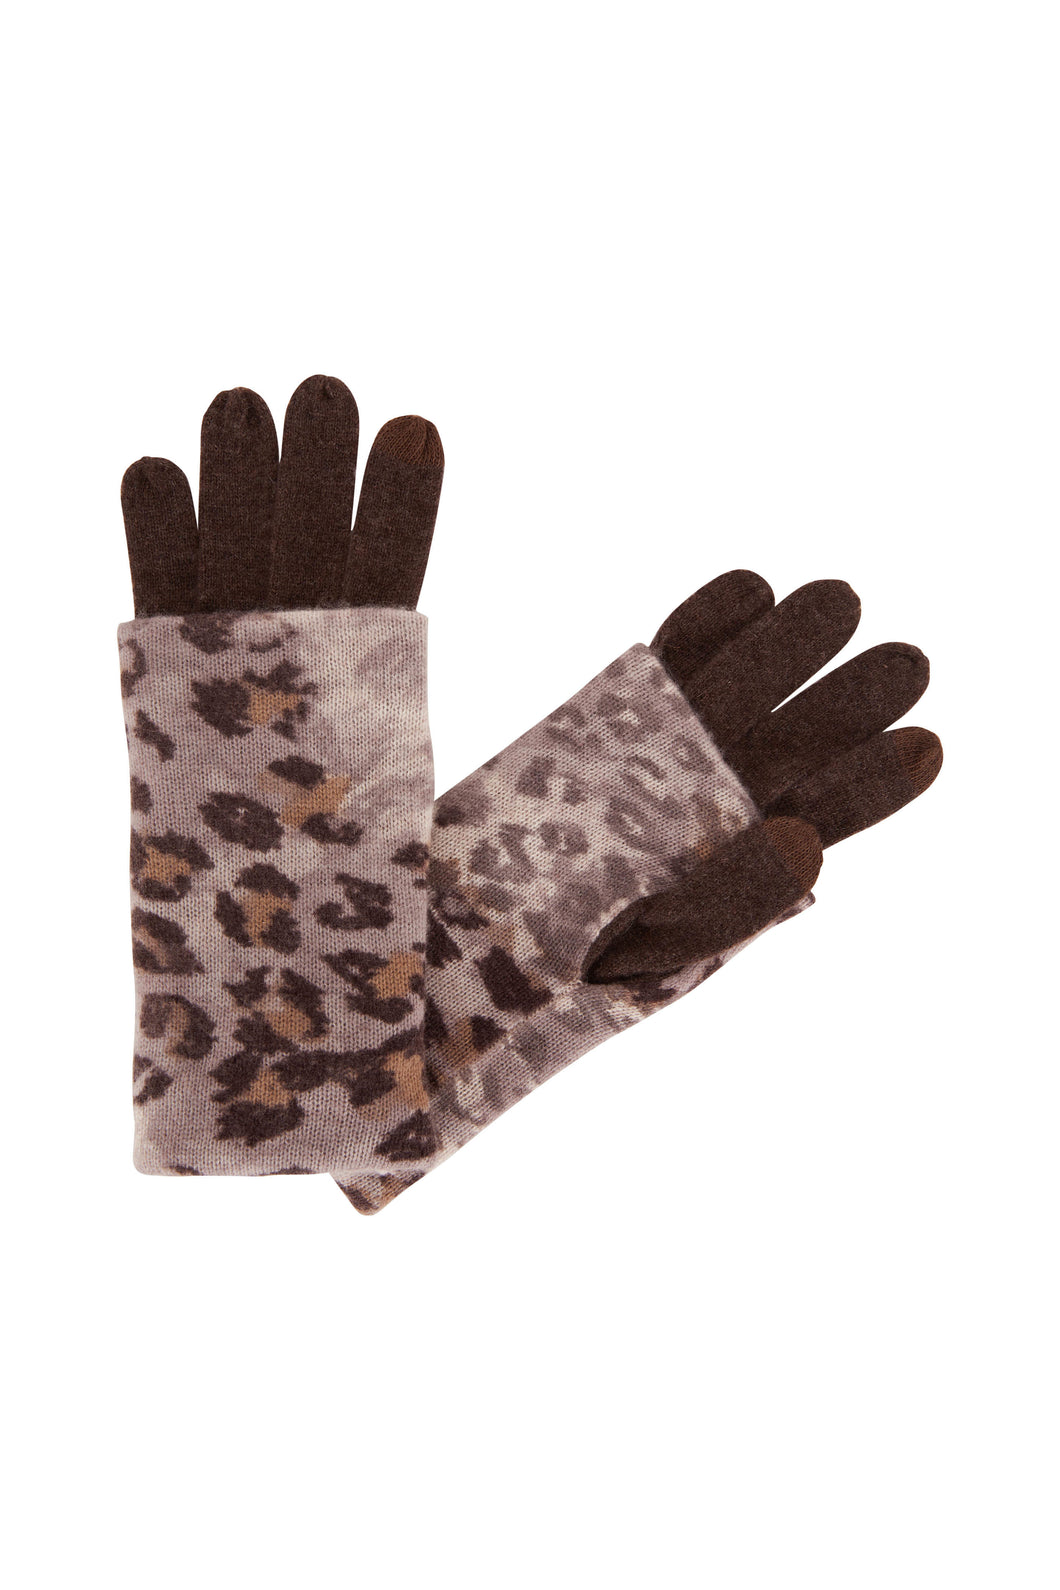 Leopard Print Cashmere Foldable Gloves by Kinross